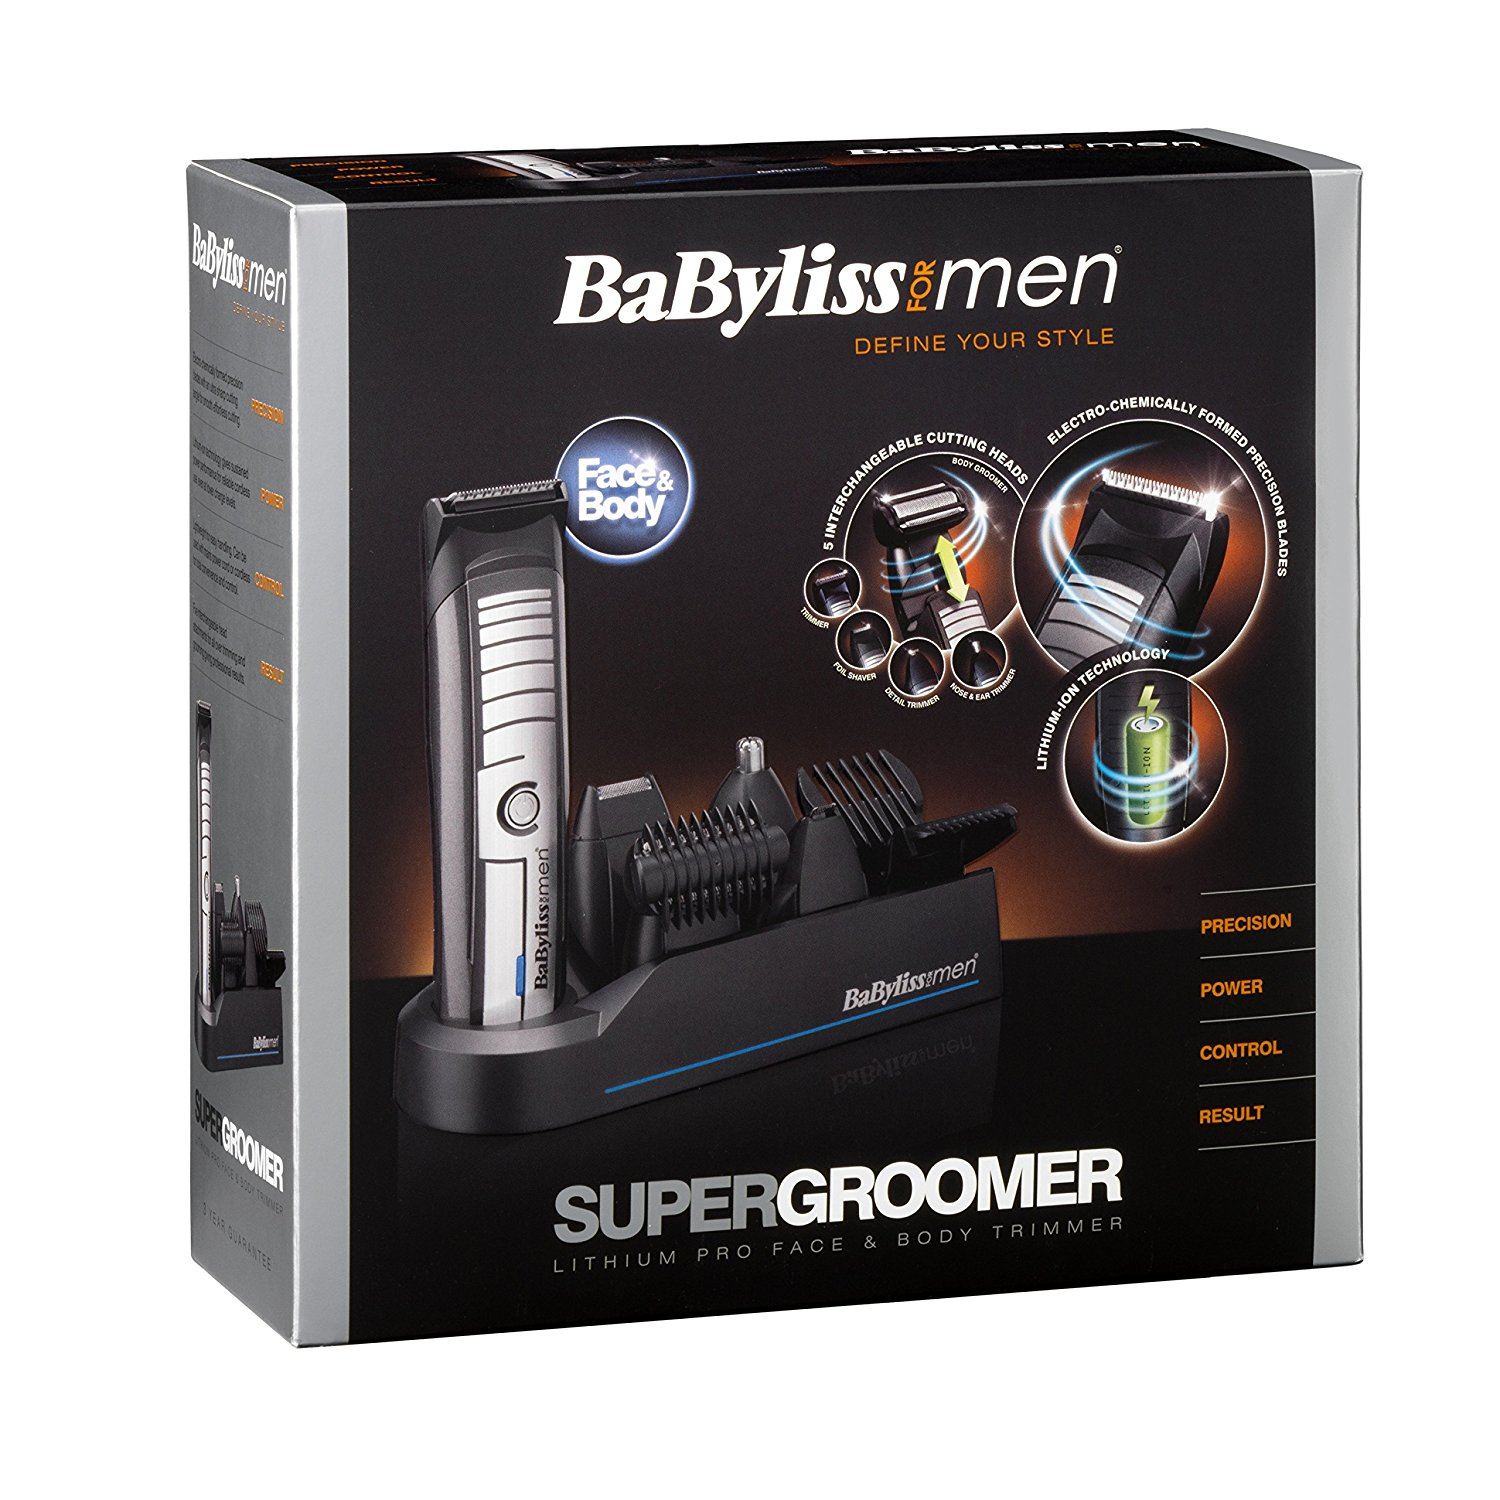 https://haircuttingtools.co.uk/wp-content/uploads/2017/06/BaByliss-for-Men-7420U-Super-Groomer-in-box.jpg